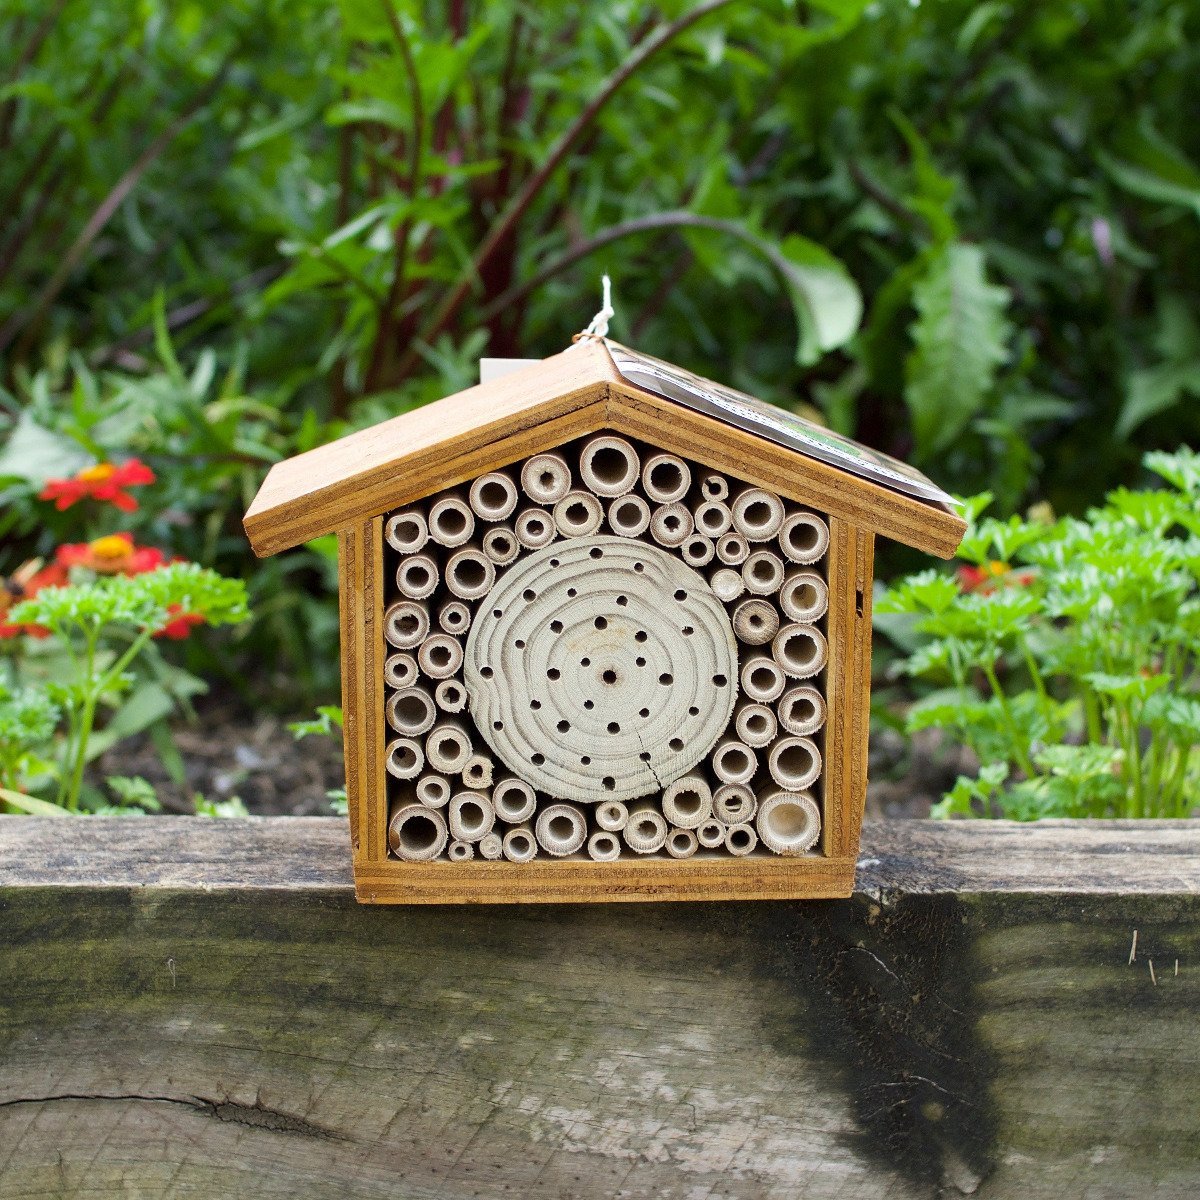 Bee Hotels and Garden Tools - Pookipoiga